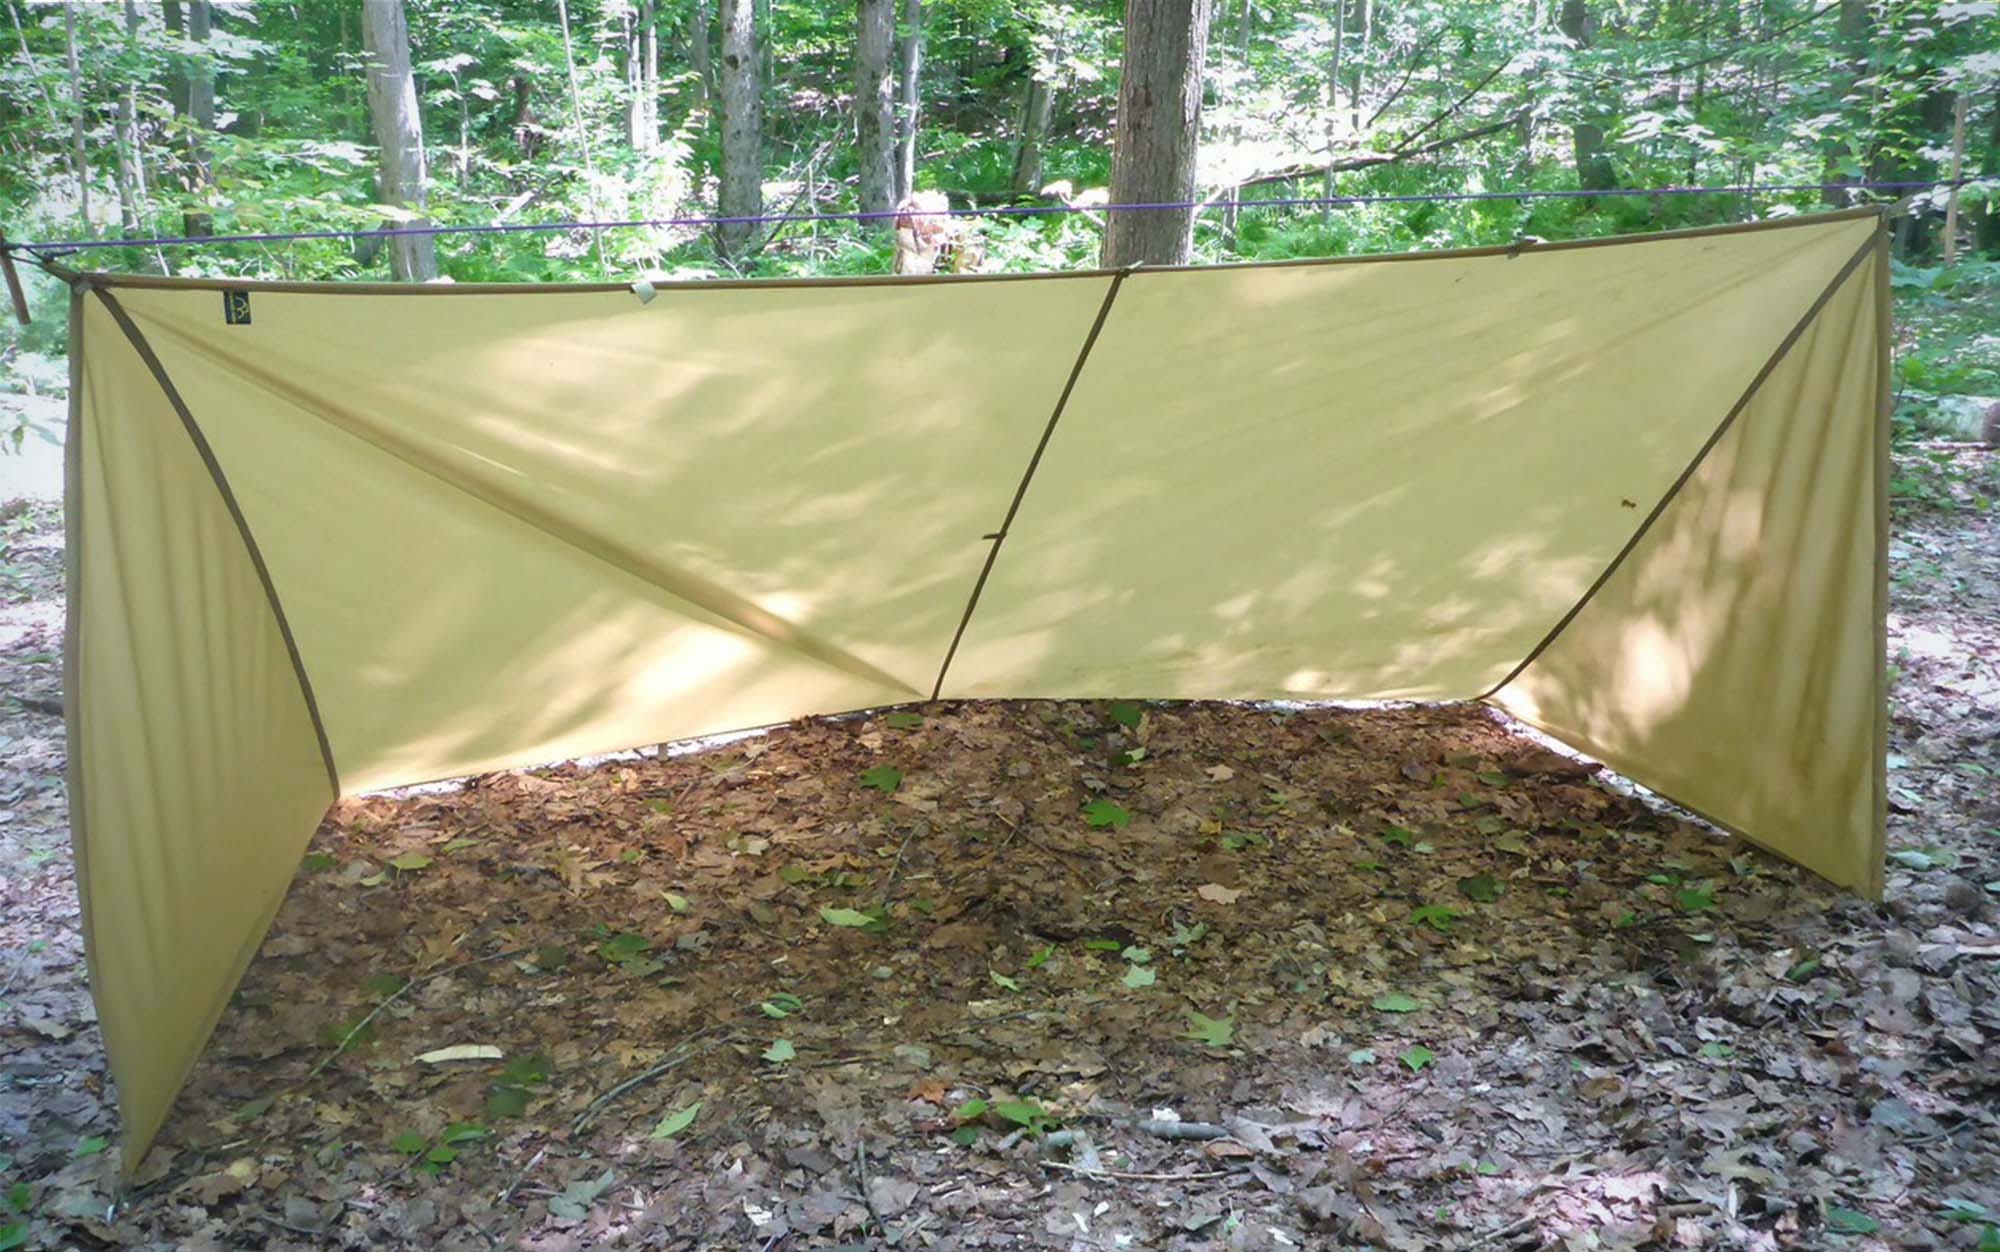 Camping Gear photo